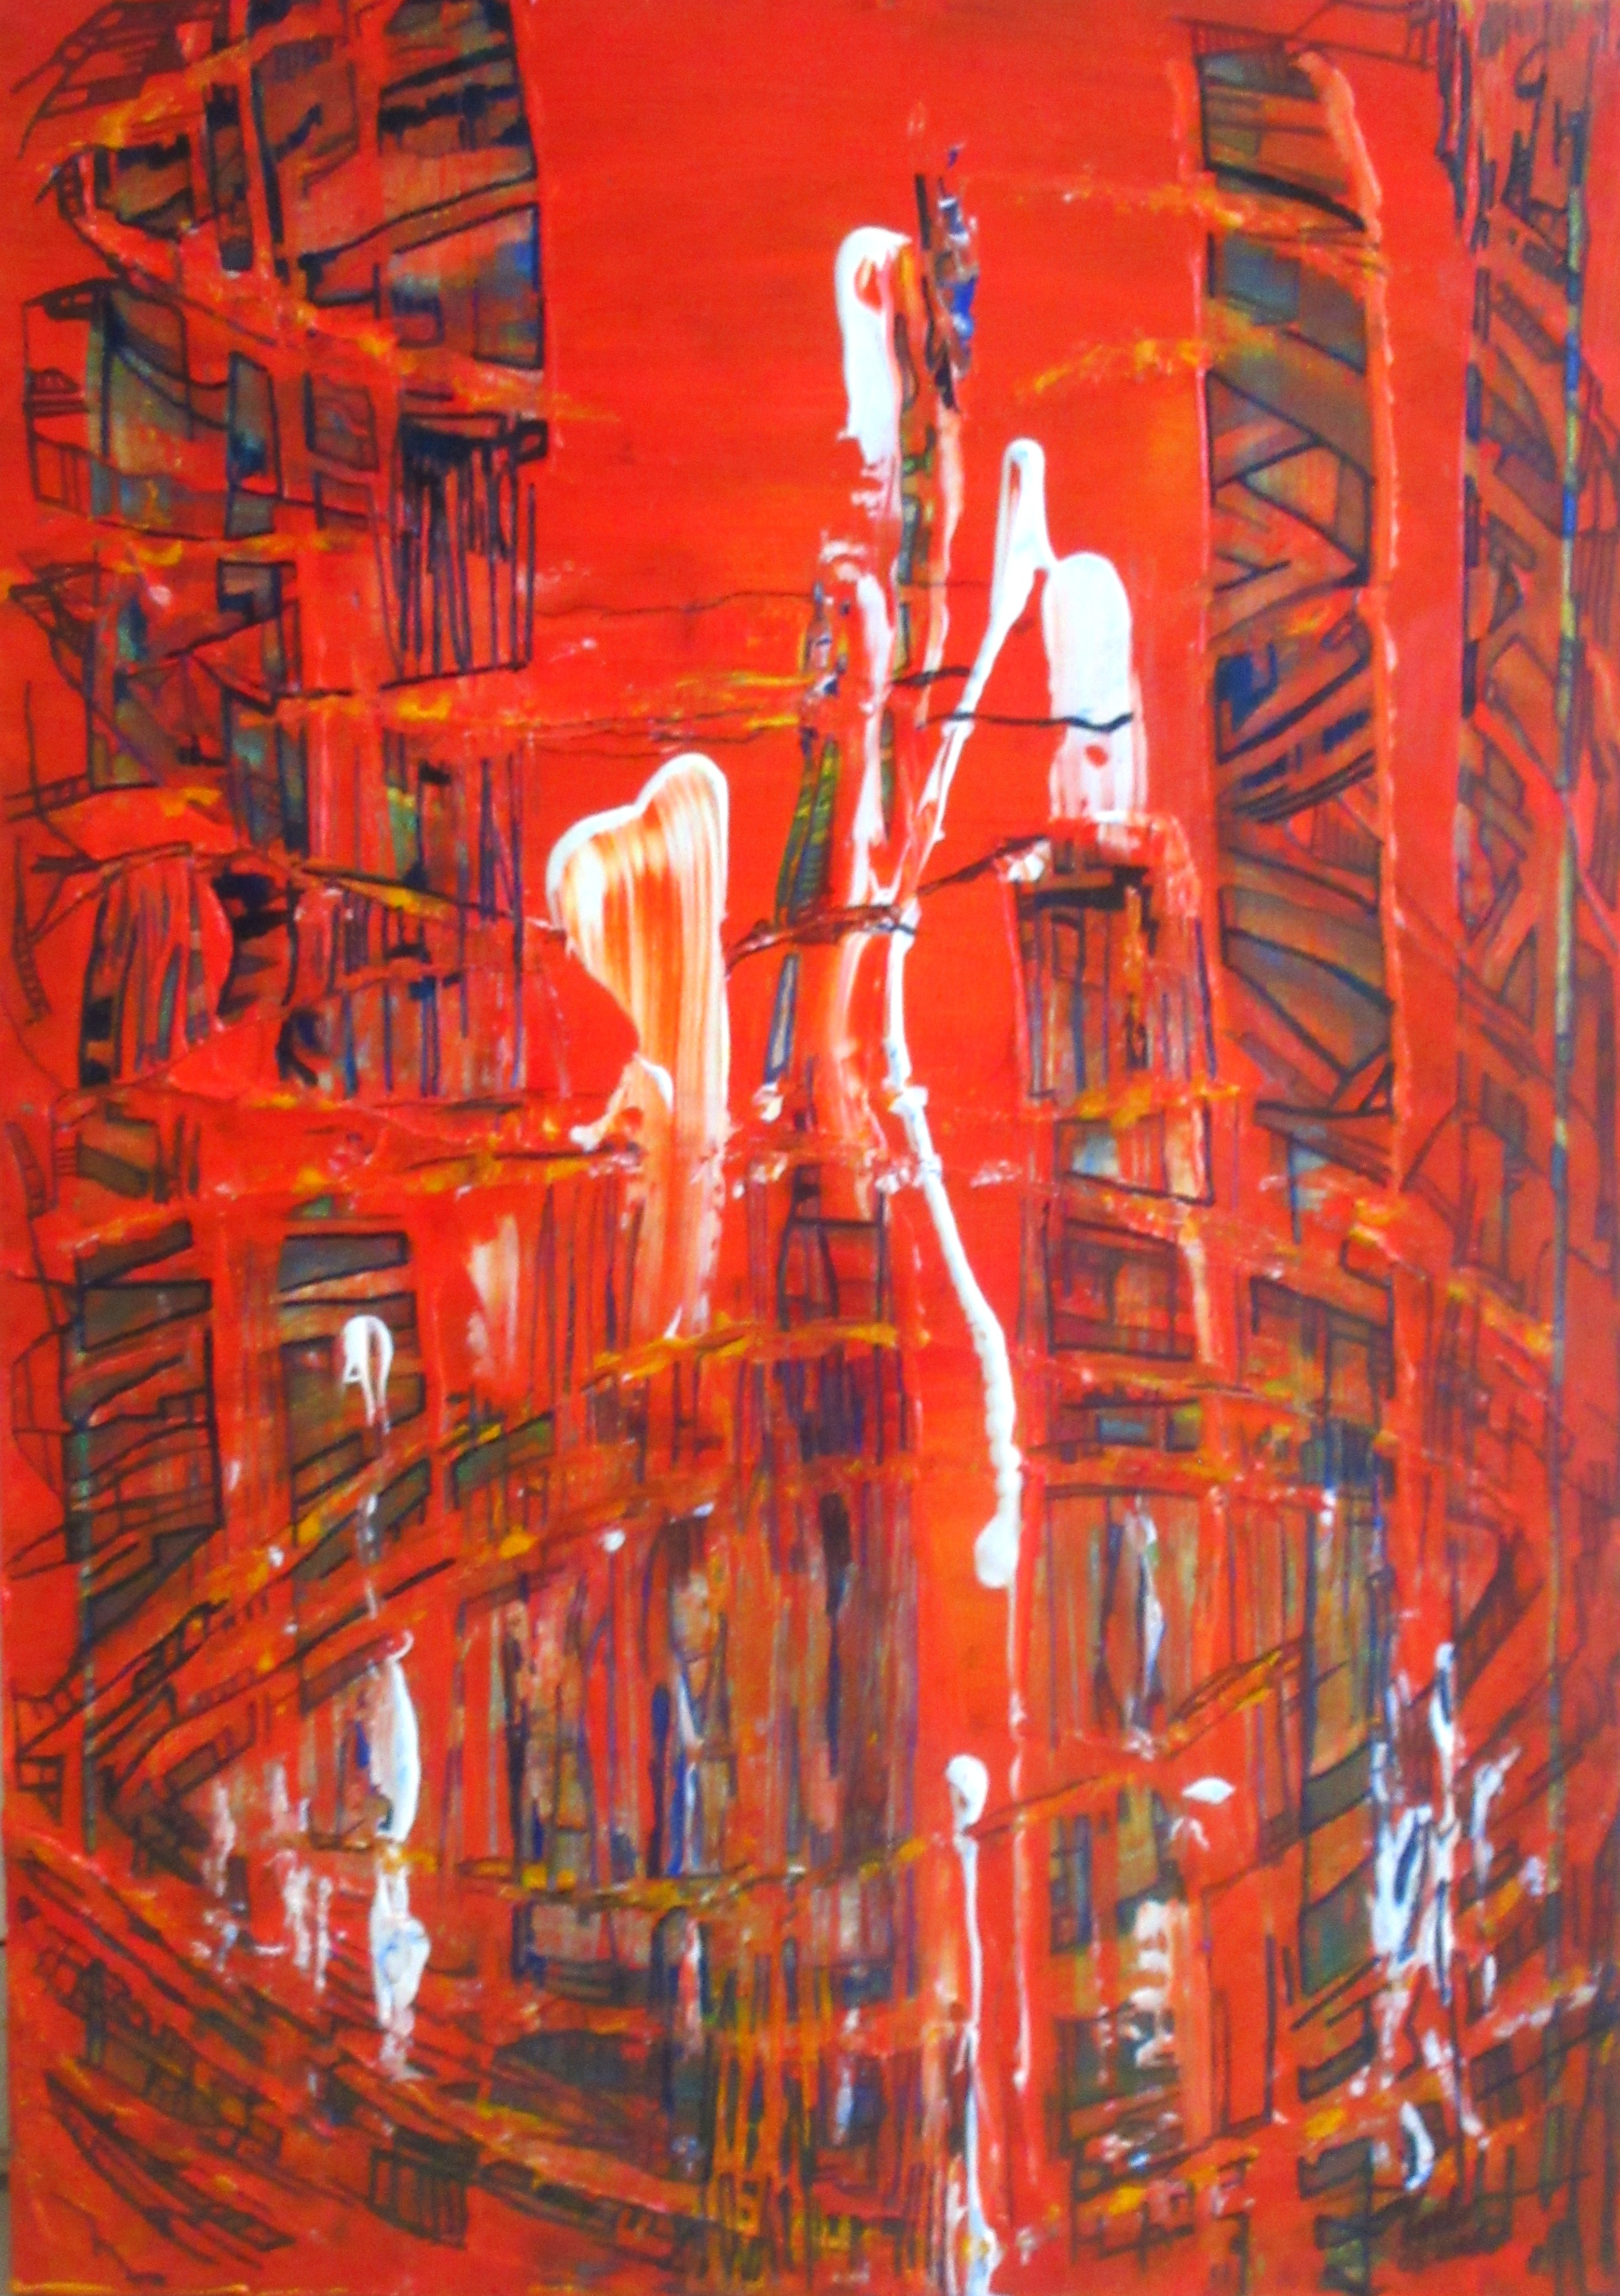 HÉLICOÏDAL SDPIRALS. Serie Abstraction 26.05.2021. 70 cm H x 60 cm W.jpg. Acryli on canvas